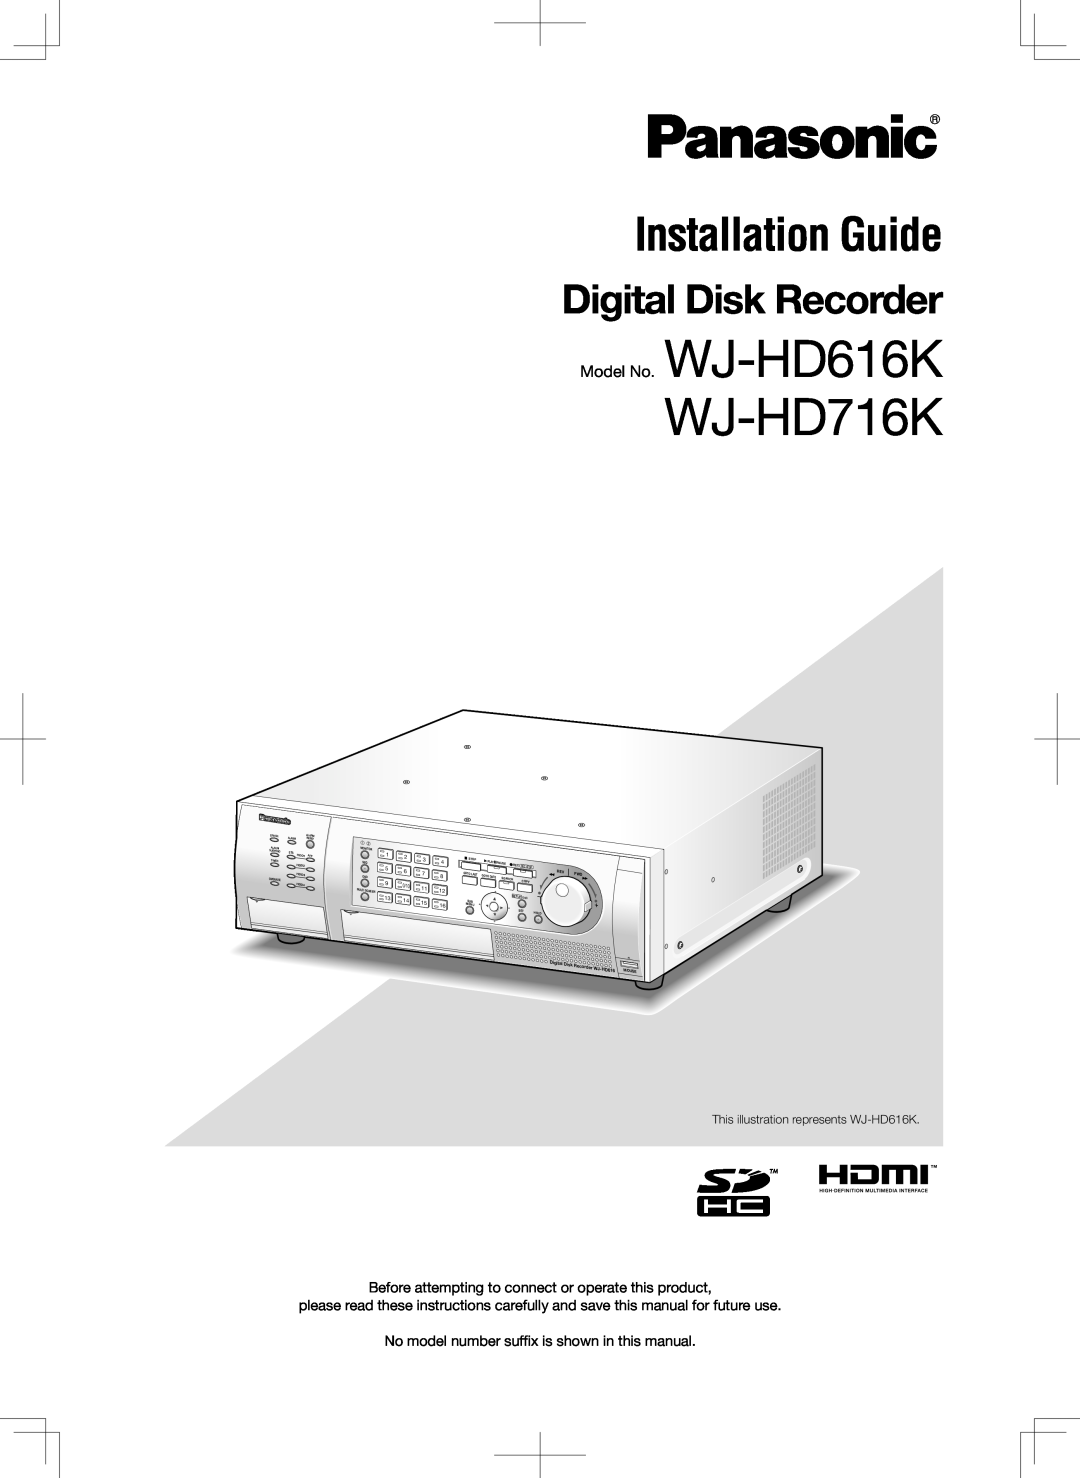 Panasonic WJ-HD616K, WJ-HD716K manual Installation Guide, Digital Disk Recorder 